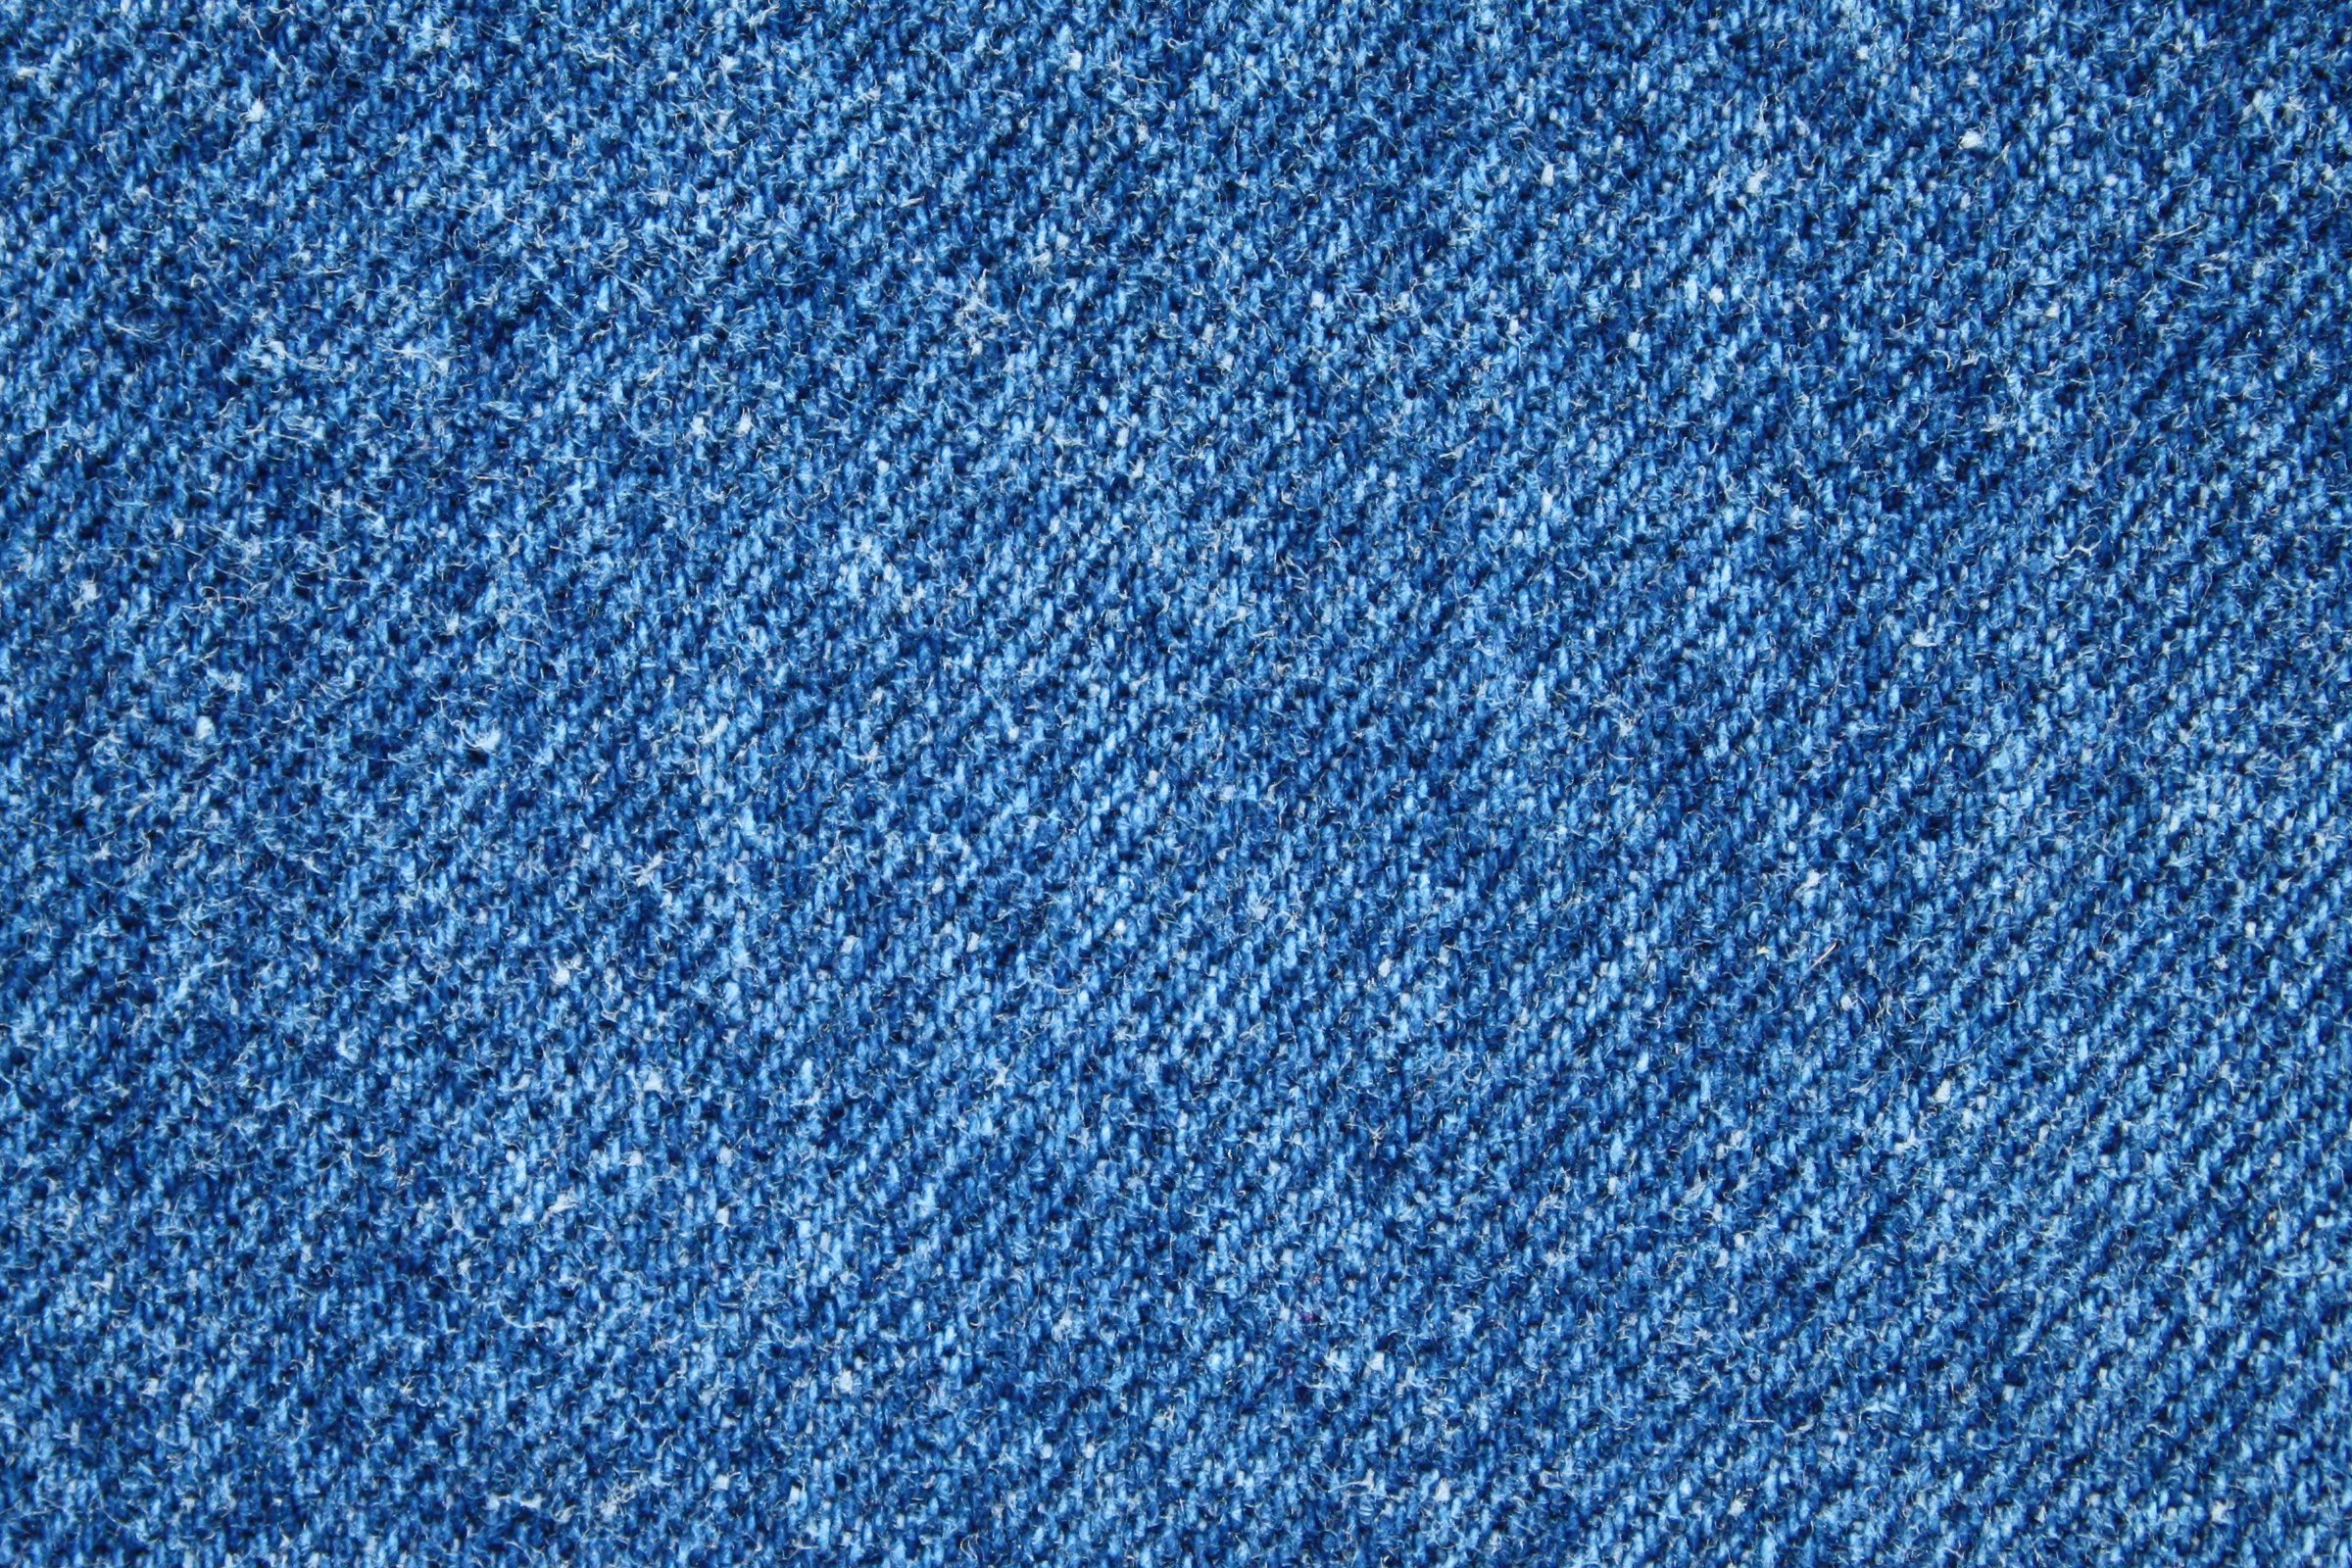 Blue Denim Fabric Closeup Texture Picture Free HD Wallpapers Download Free Images Wallpaper [wallpaper981.blogspot.com]